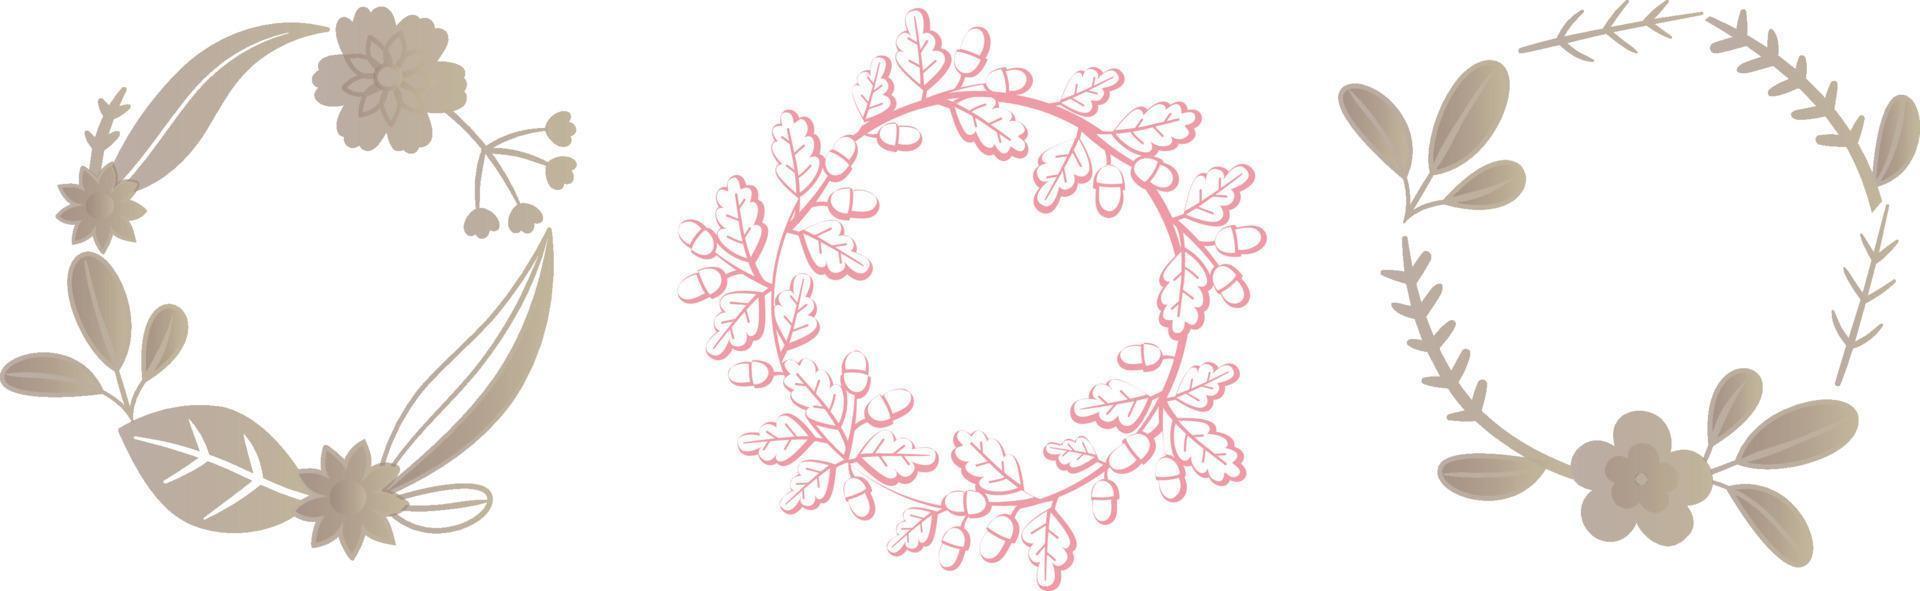 Watercolour floral wreath vector